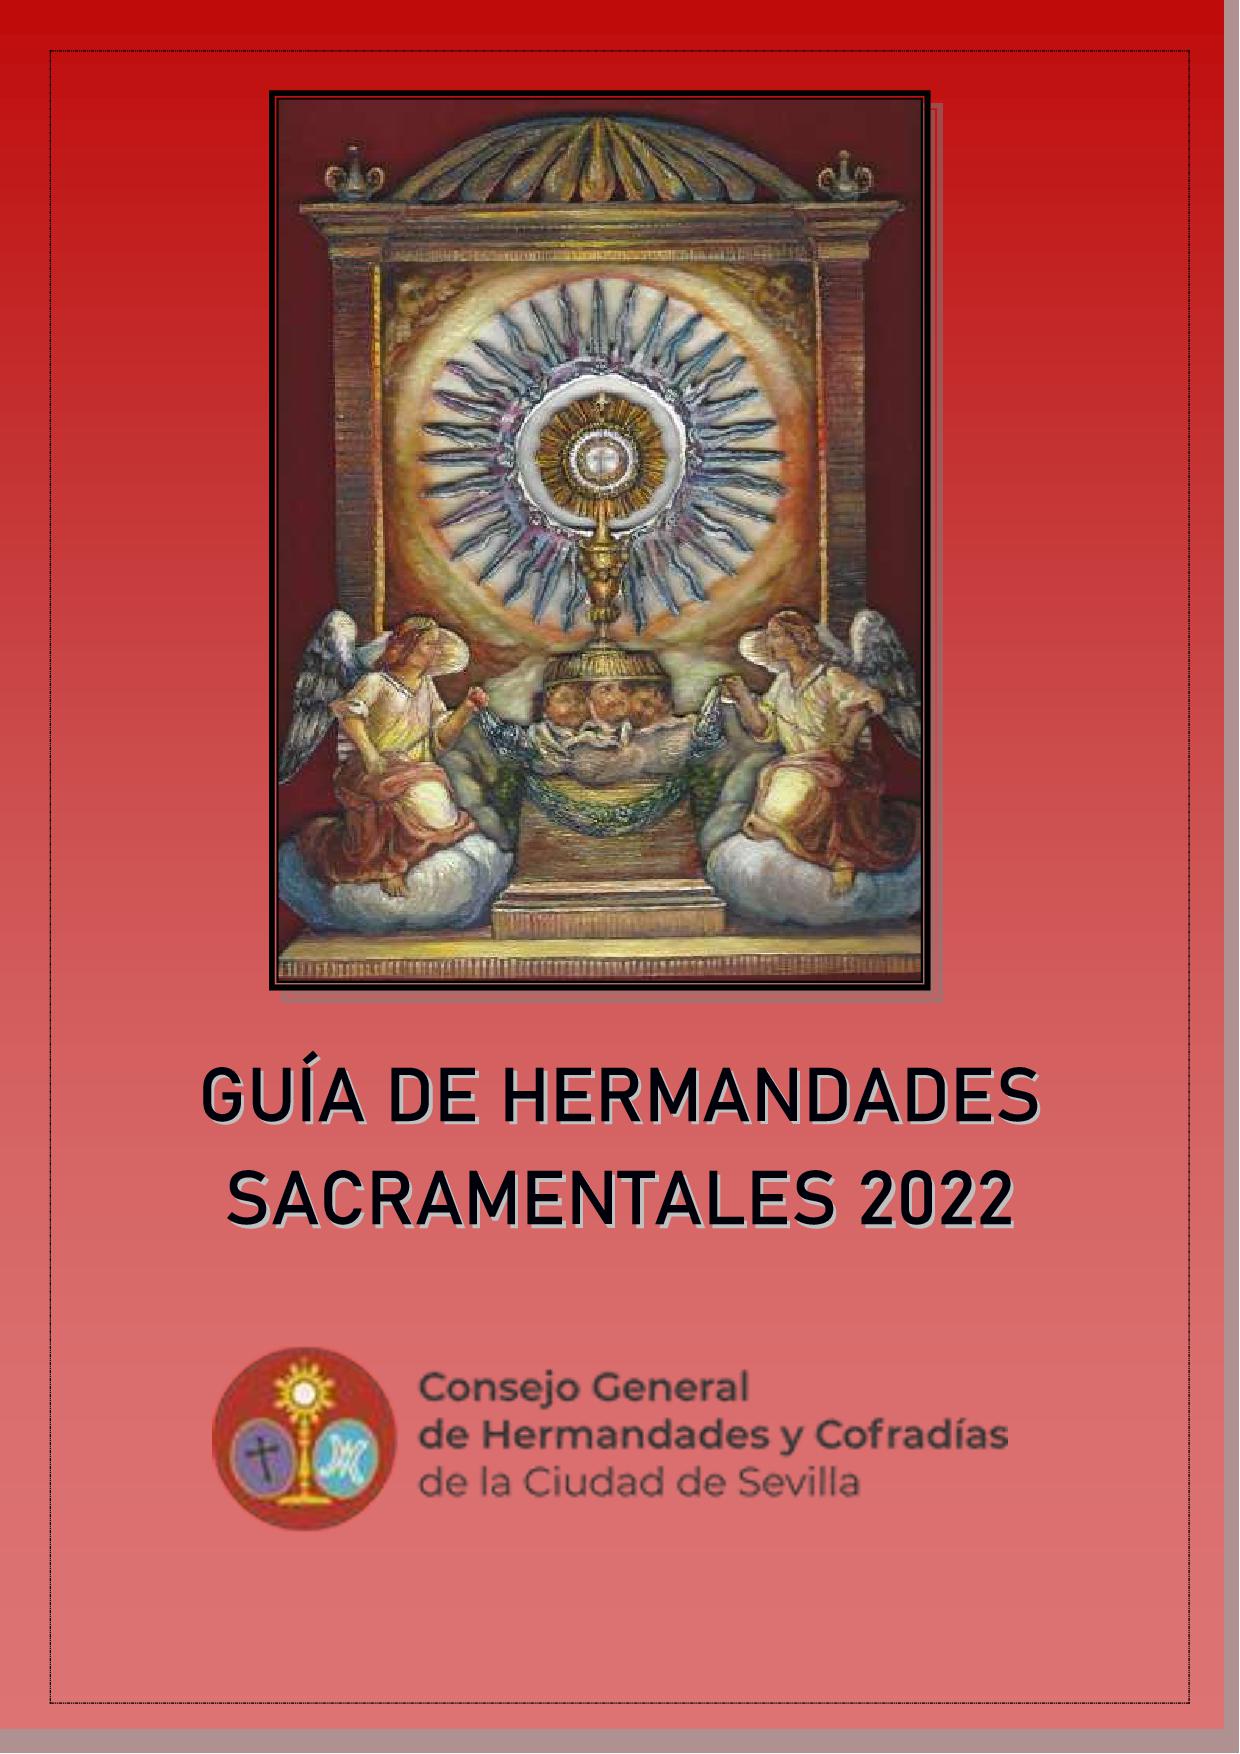 Descargue o lea la Guía de Hermandades Sacramentales de Sevilla 2022